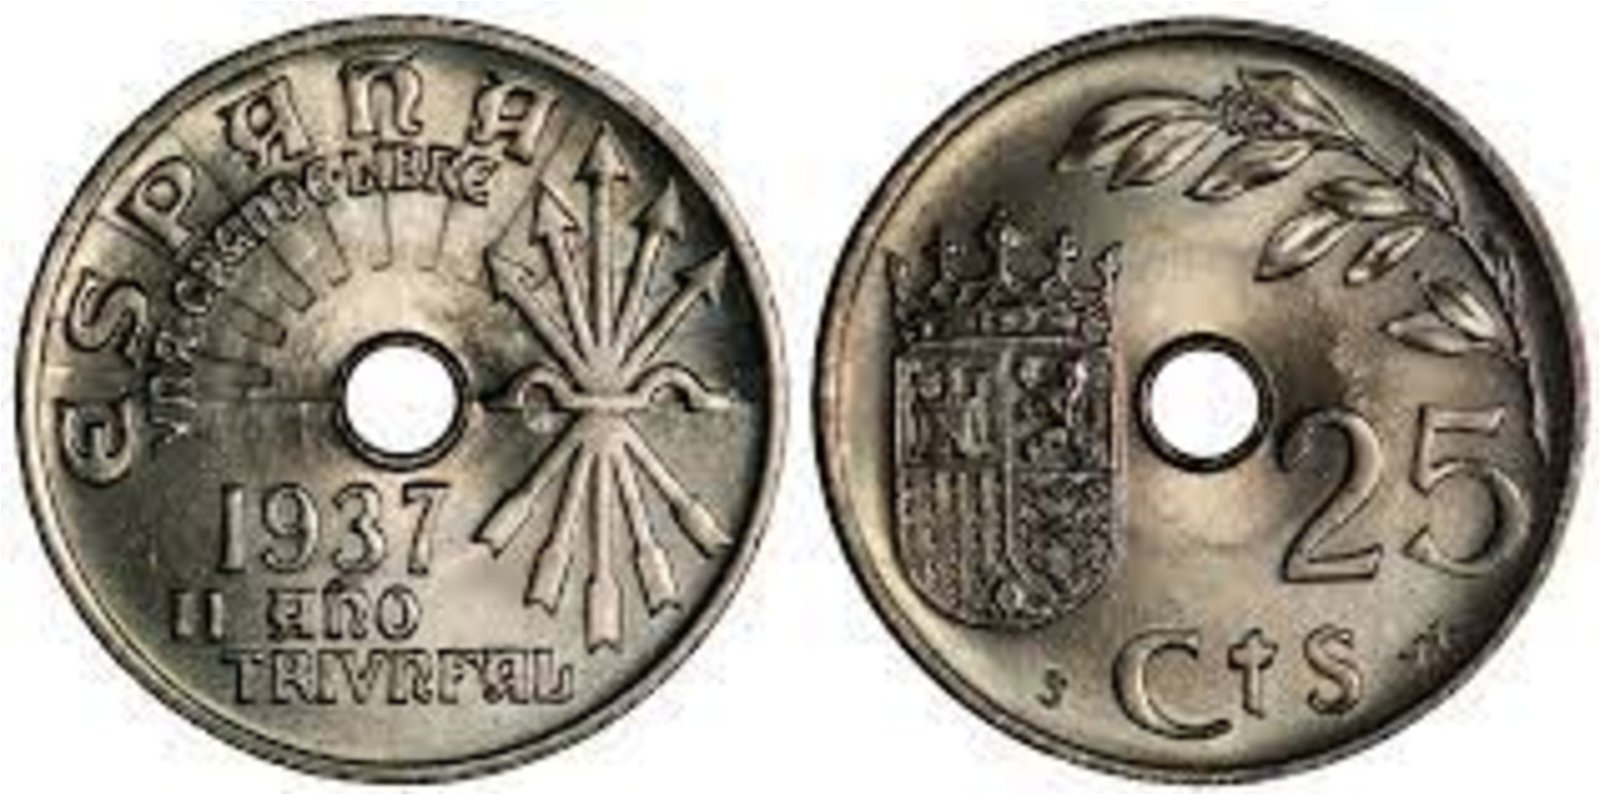 Las 5 monedas de peseta más valiosas de la historia 2